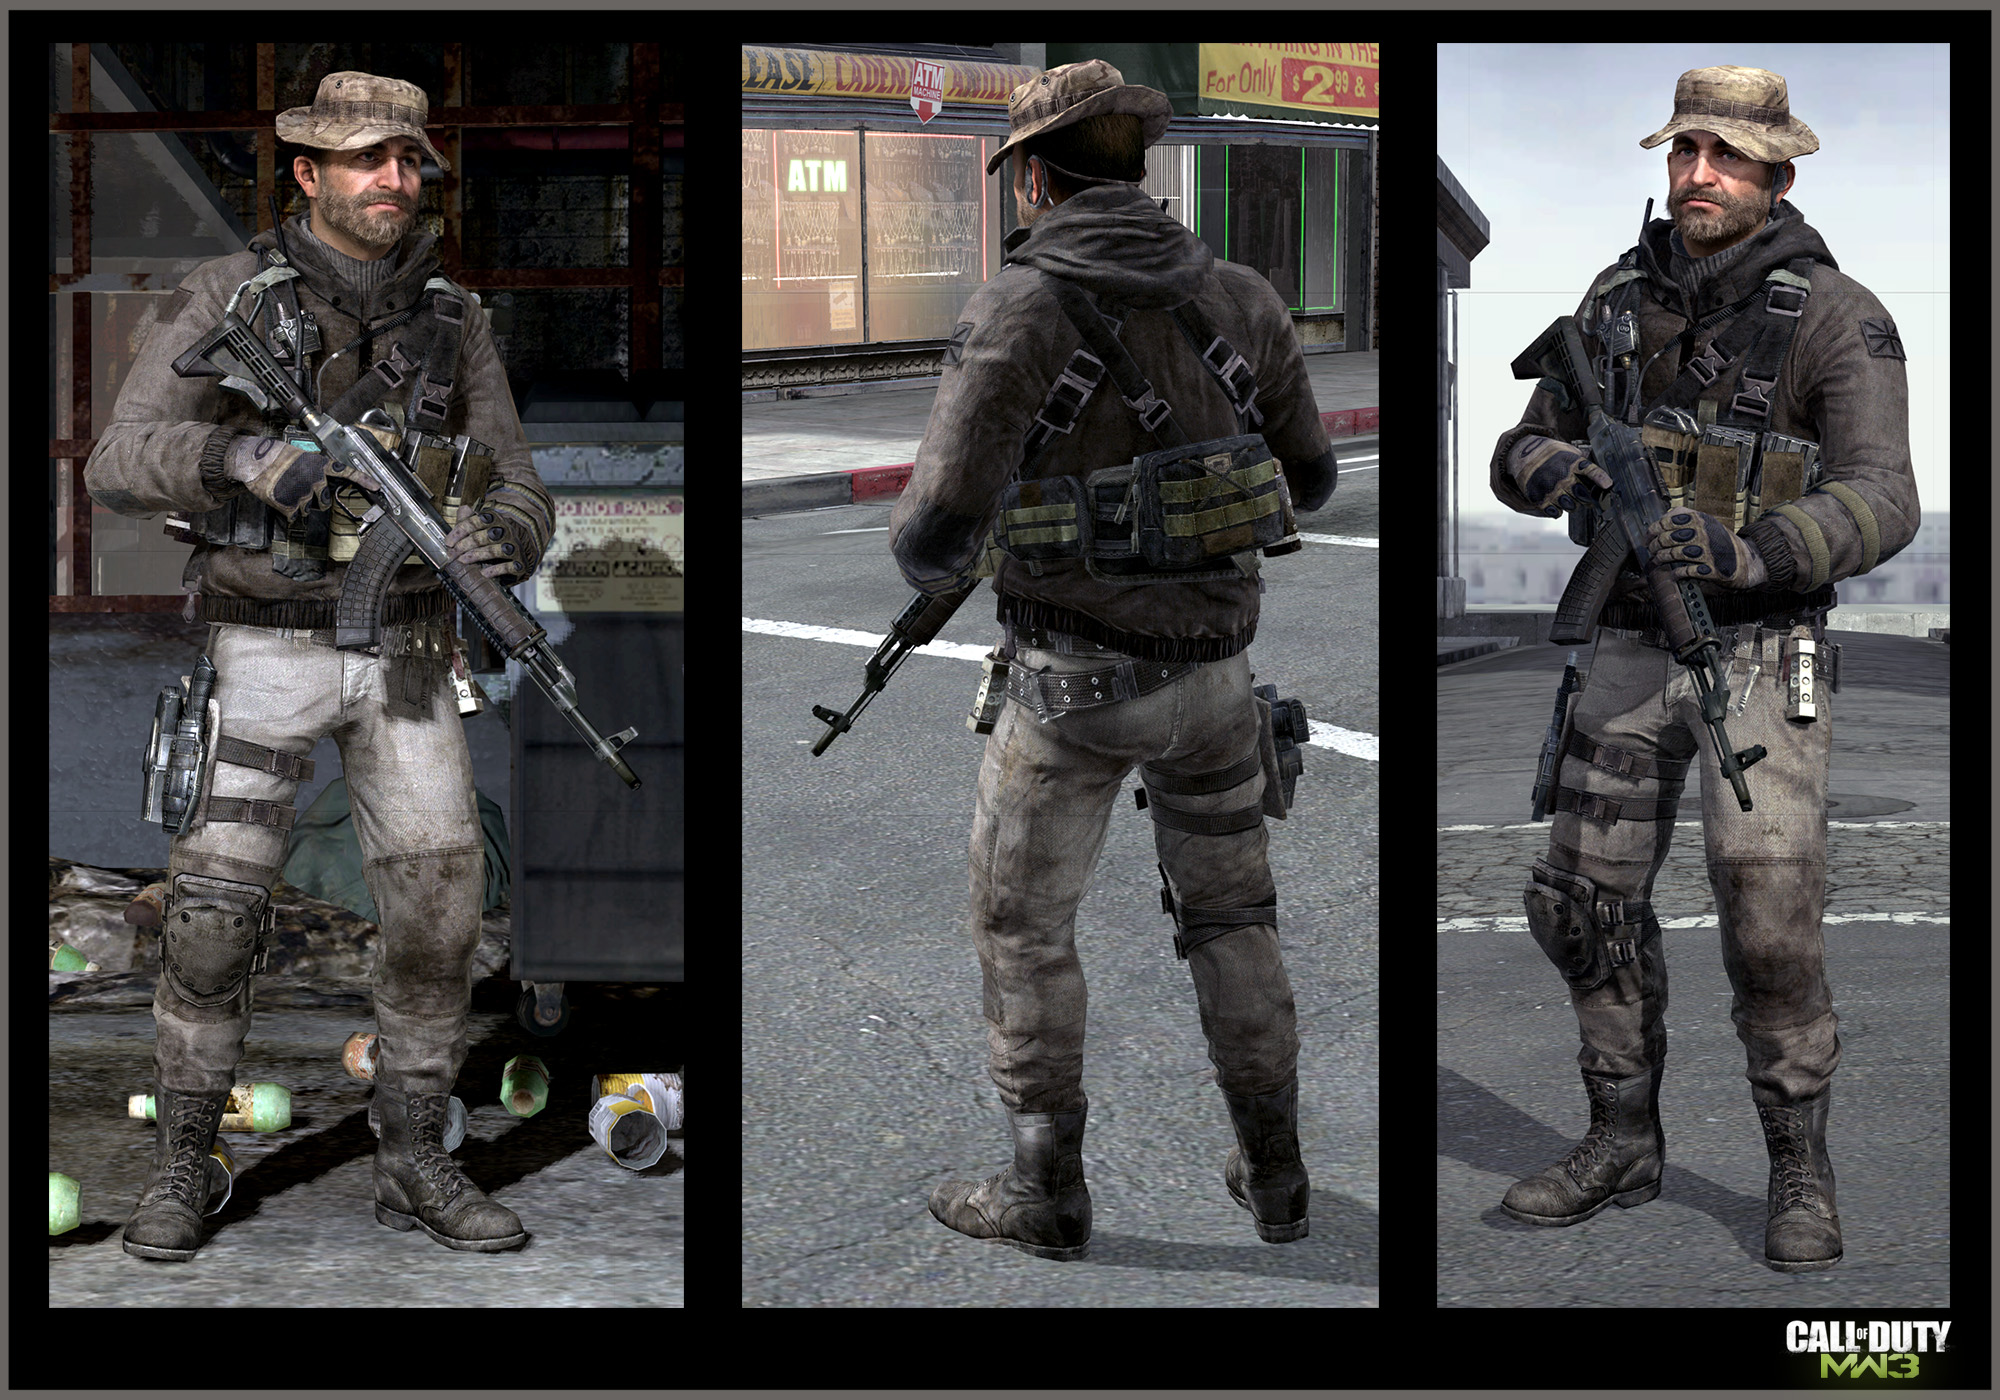 Call of Duty: Modern Warfare III': Buy Online, Pricing